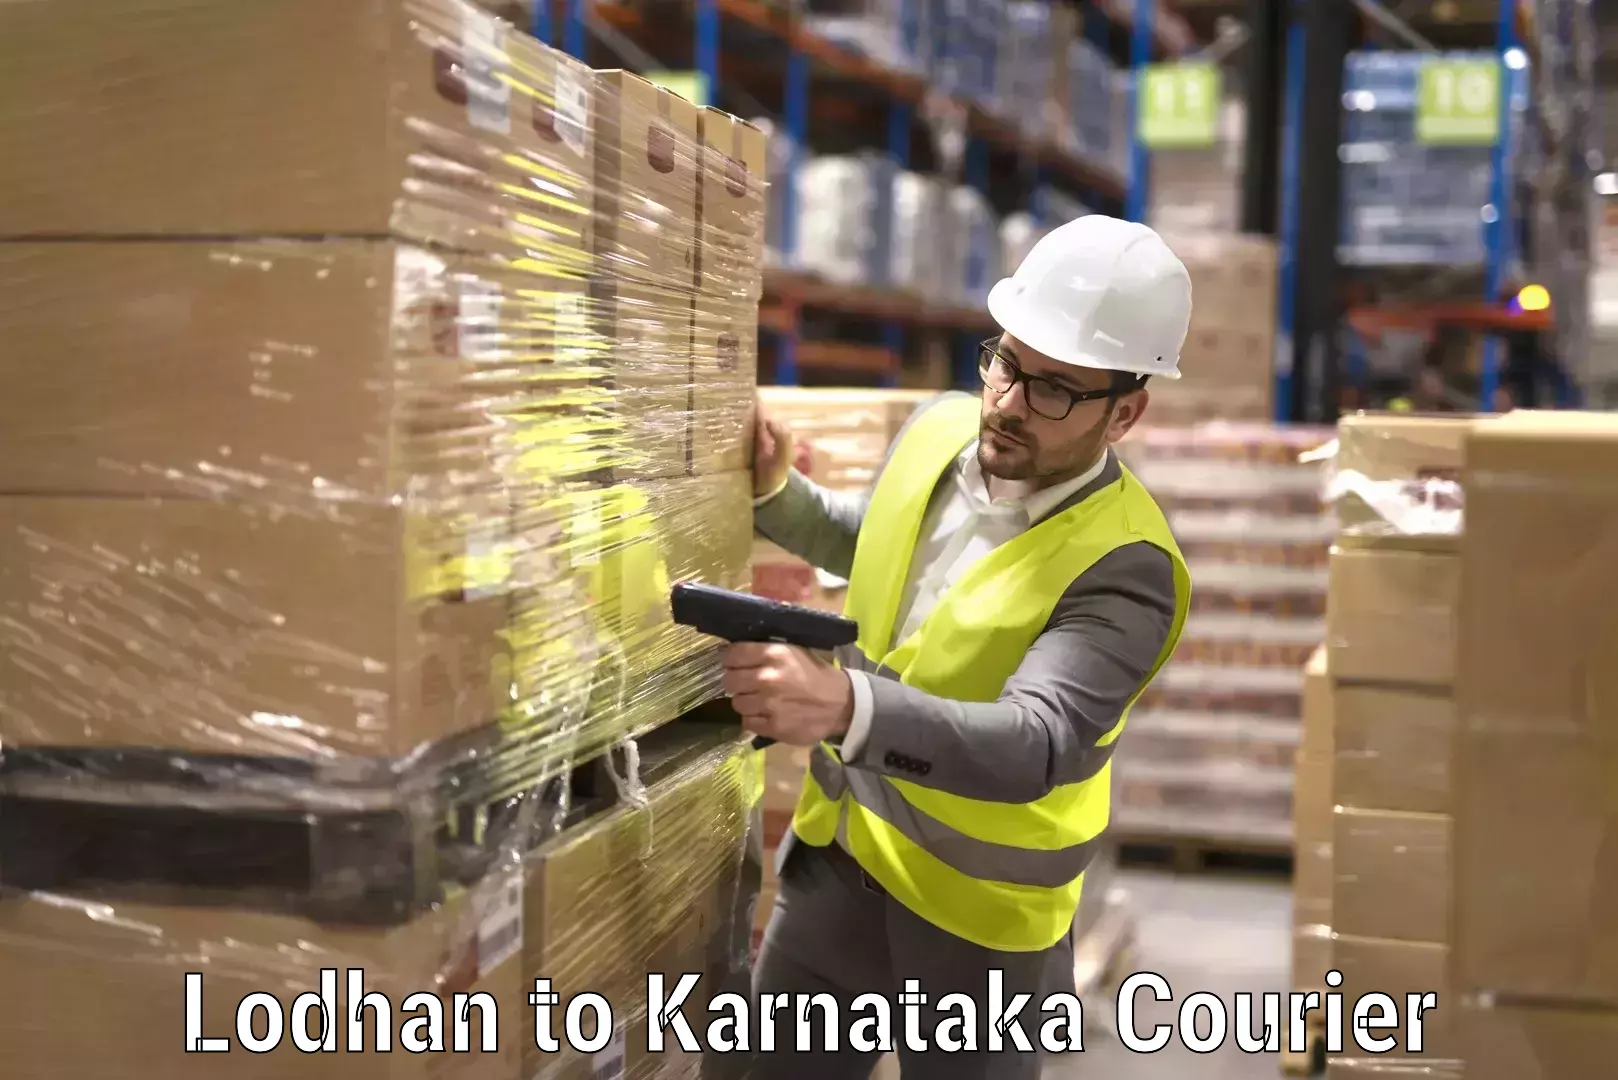 Efficient moving company Lodhan to Karnataka